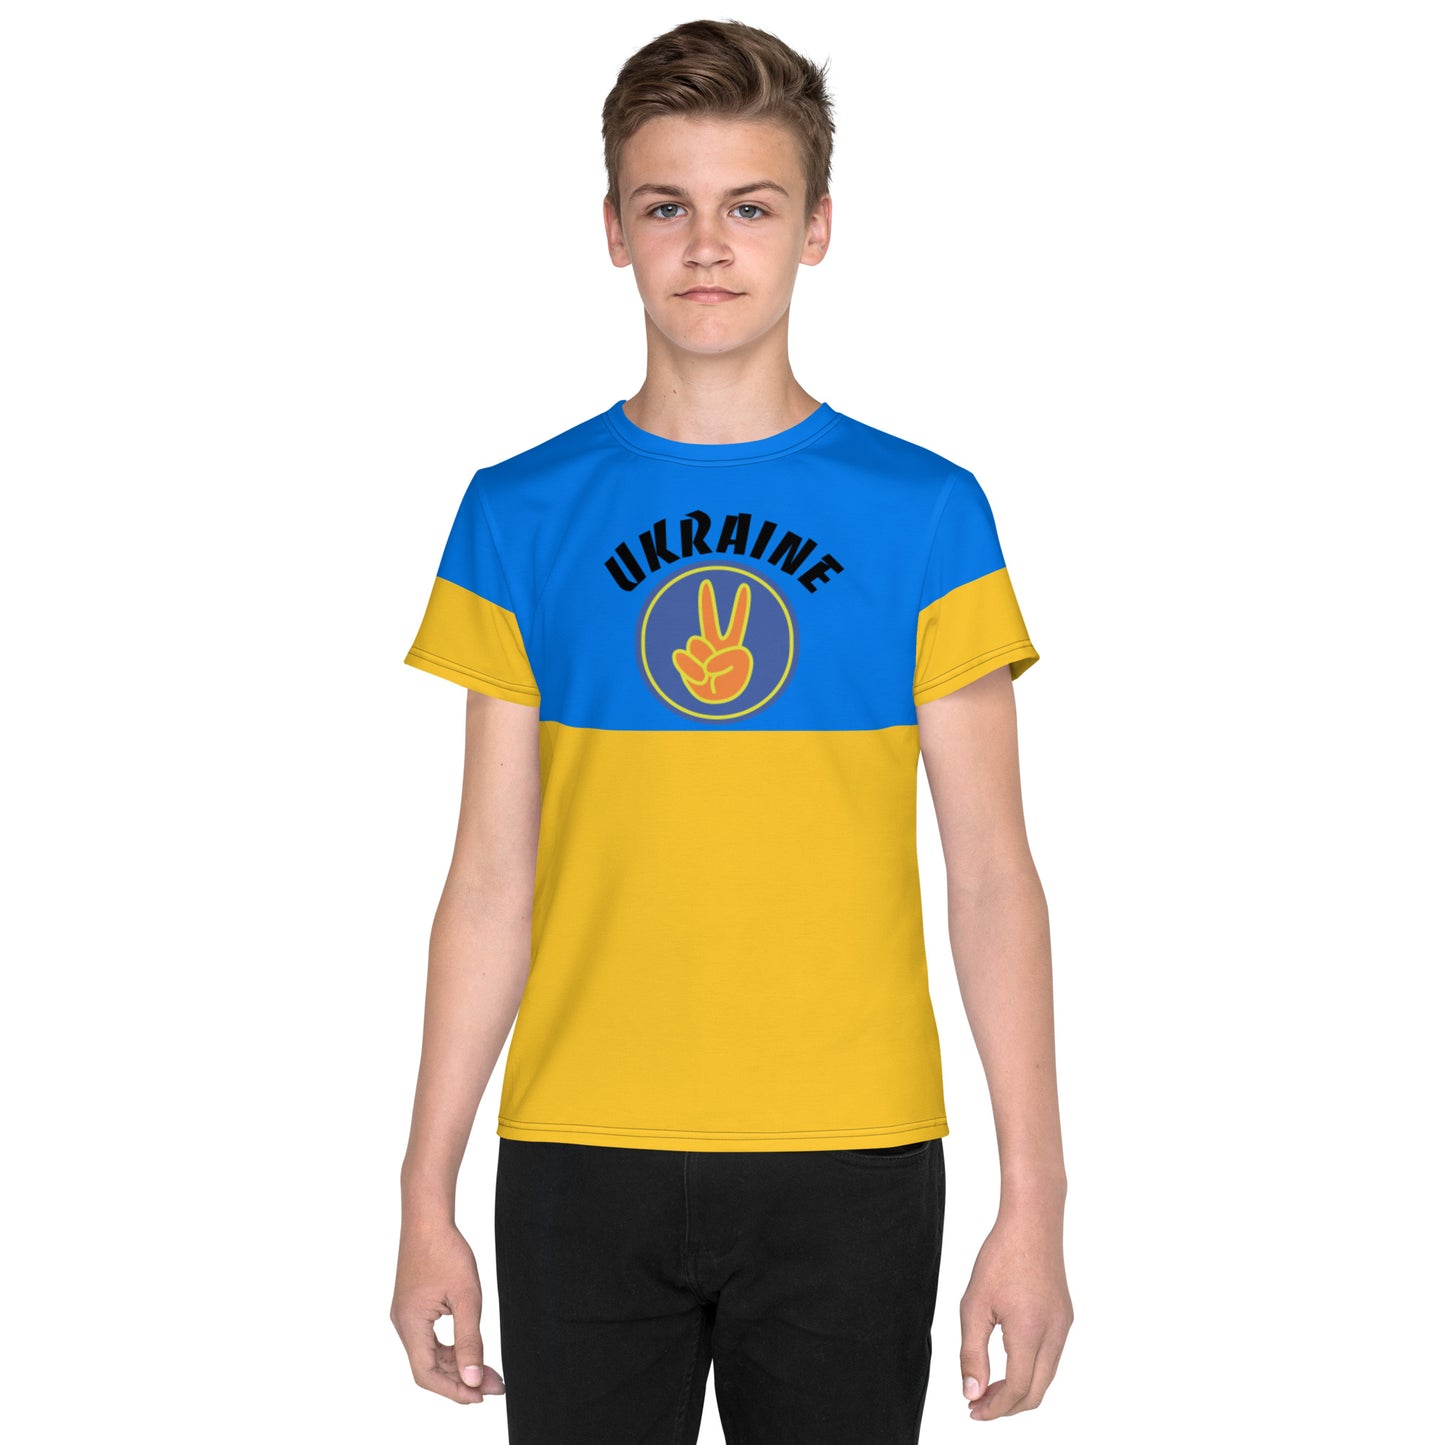 Ukraine 954 Youth crew neck t-shirt